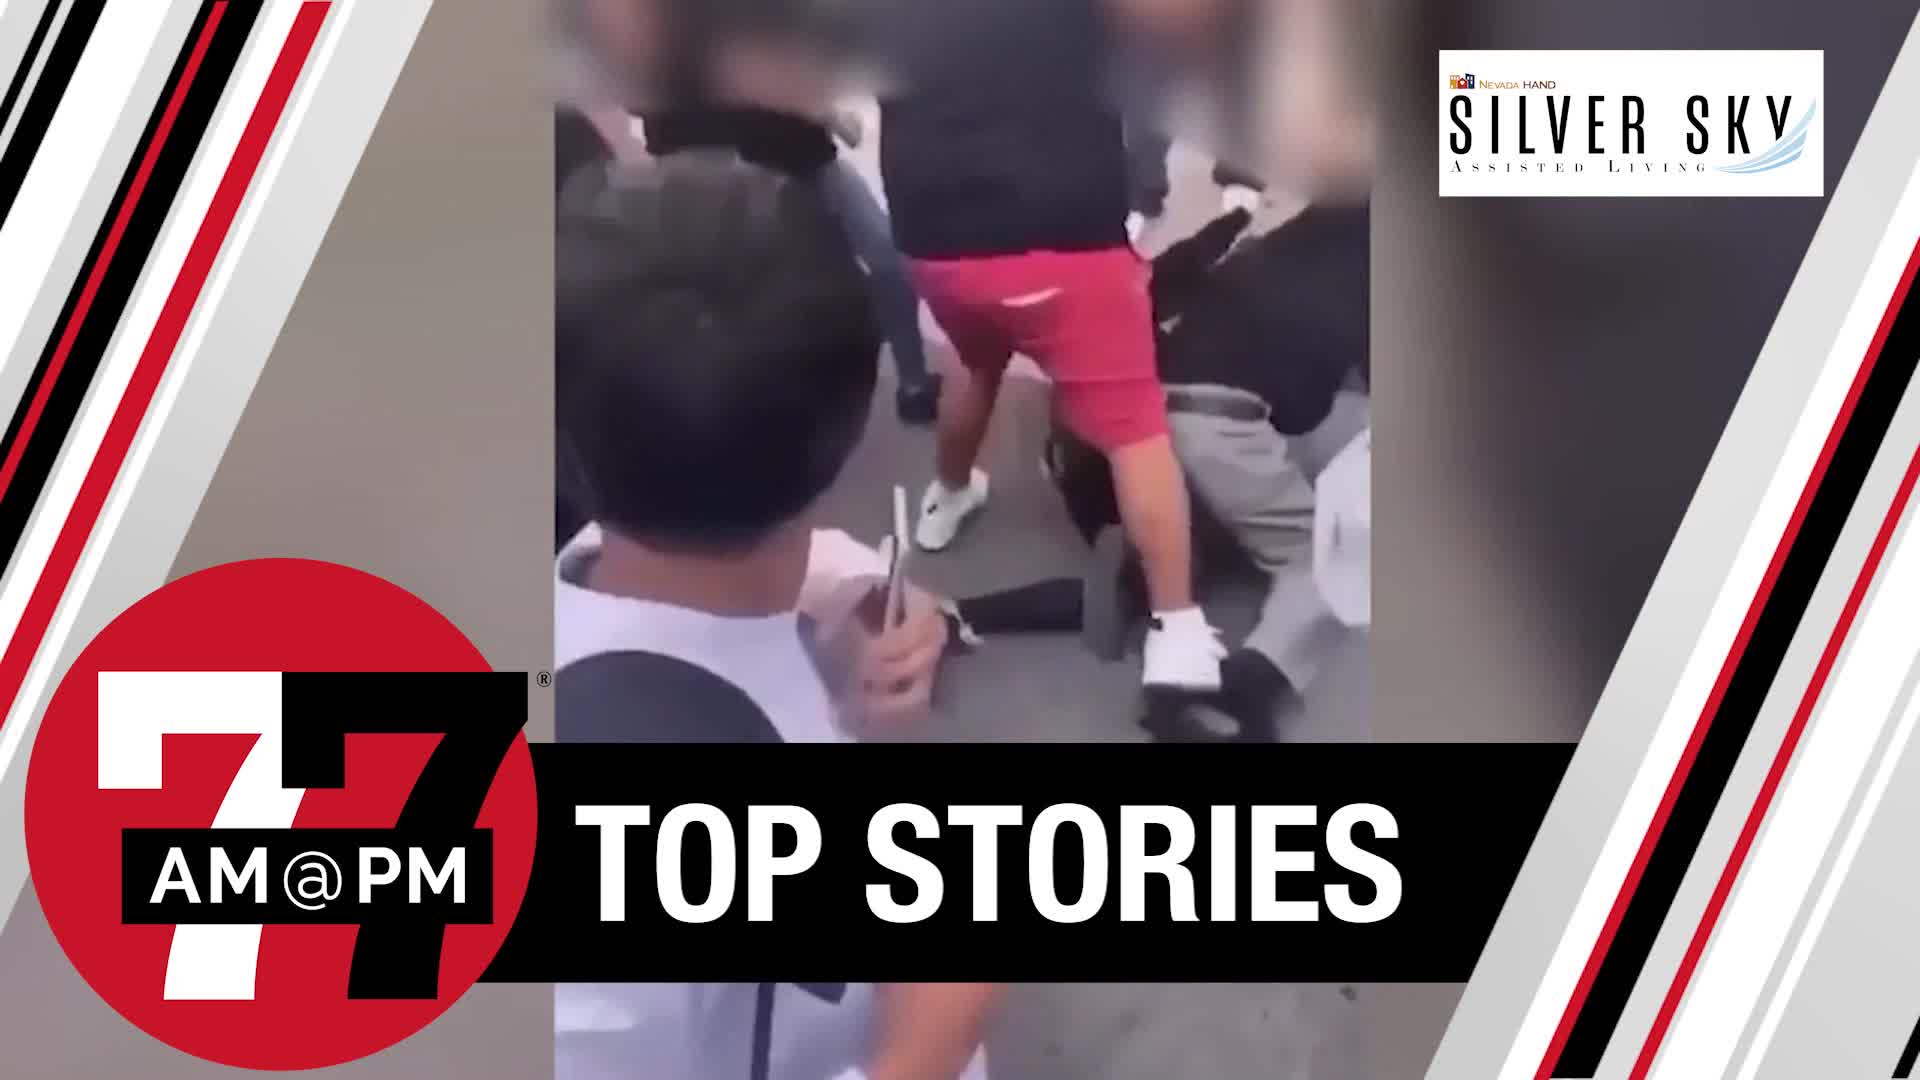 Video: Man & child fighting